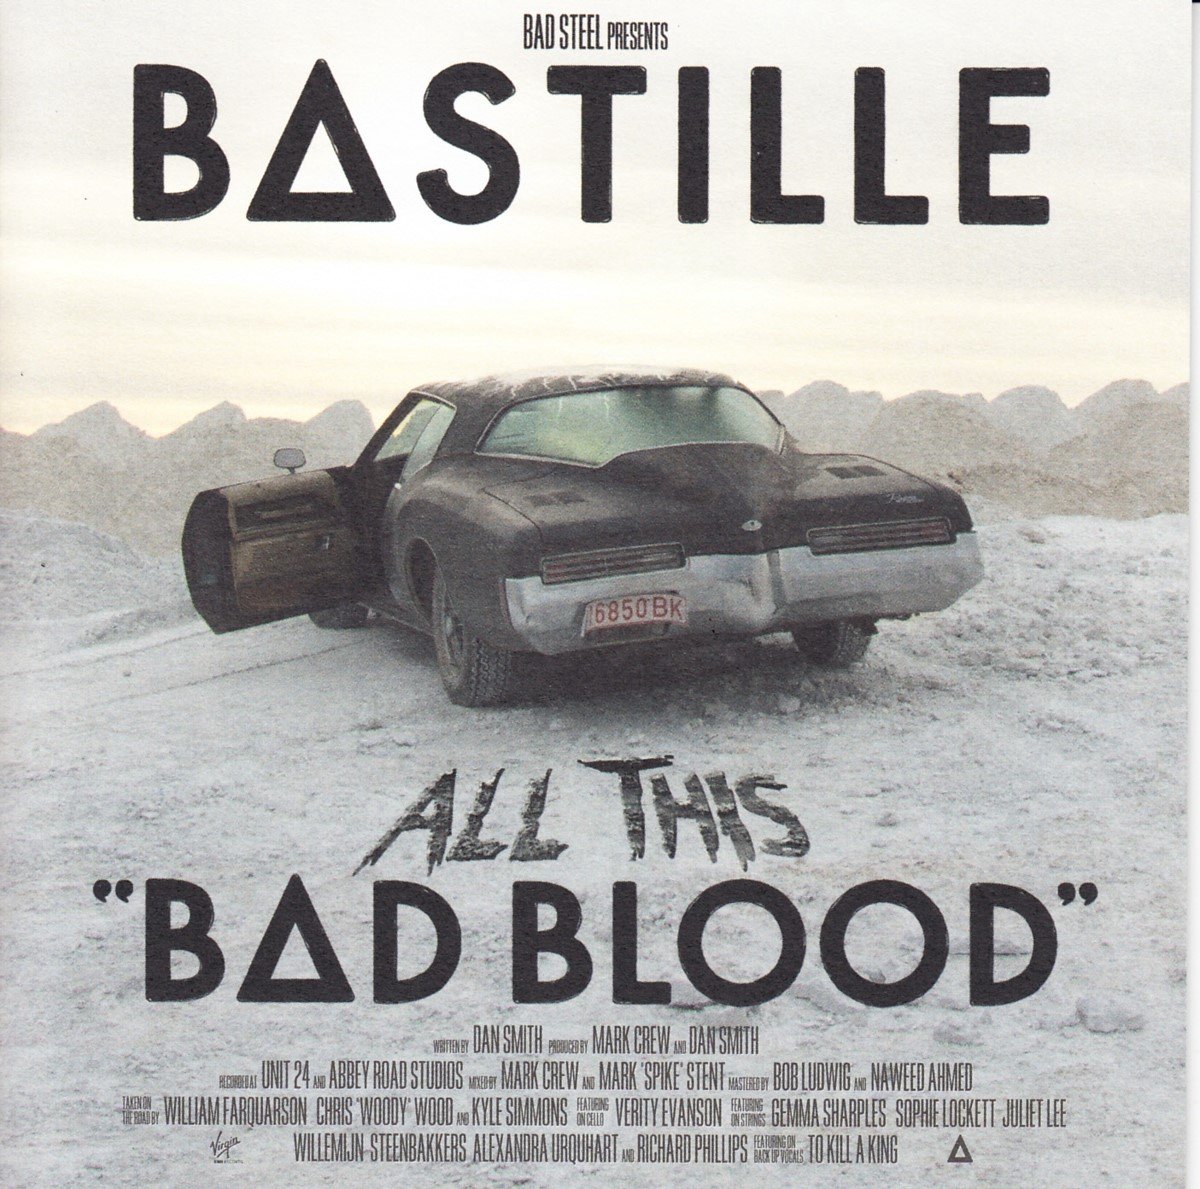 Bastille - All This Bad Blood (2 CD) (Reissue) - Bastille